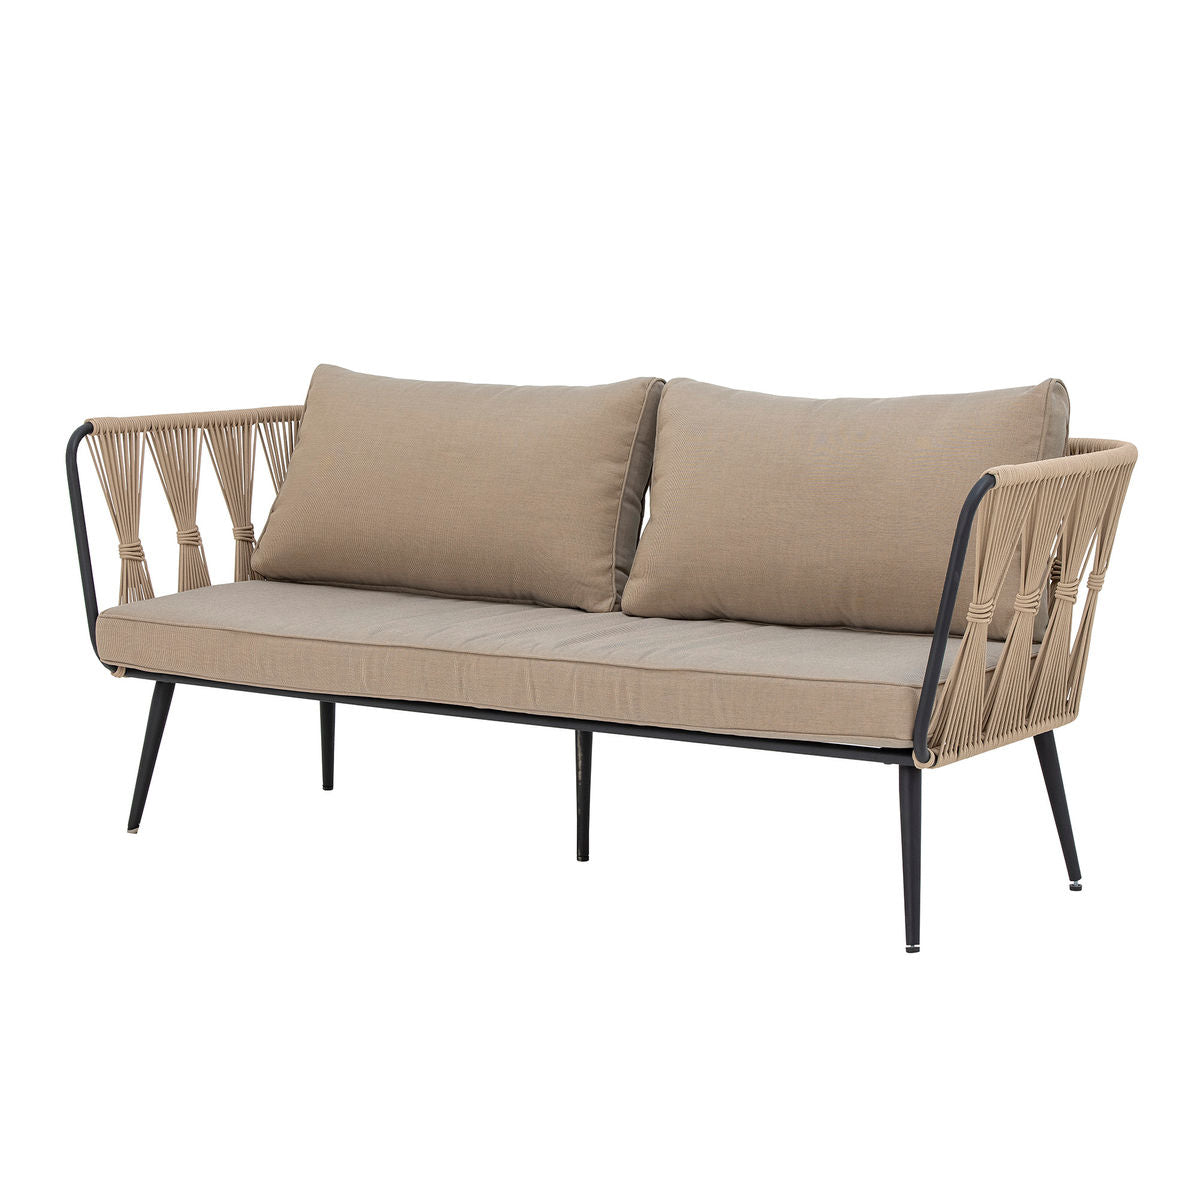 Bloomingville -padon -sohva, ruskea, metalli